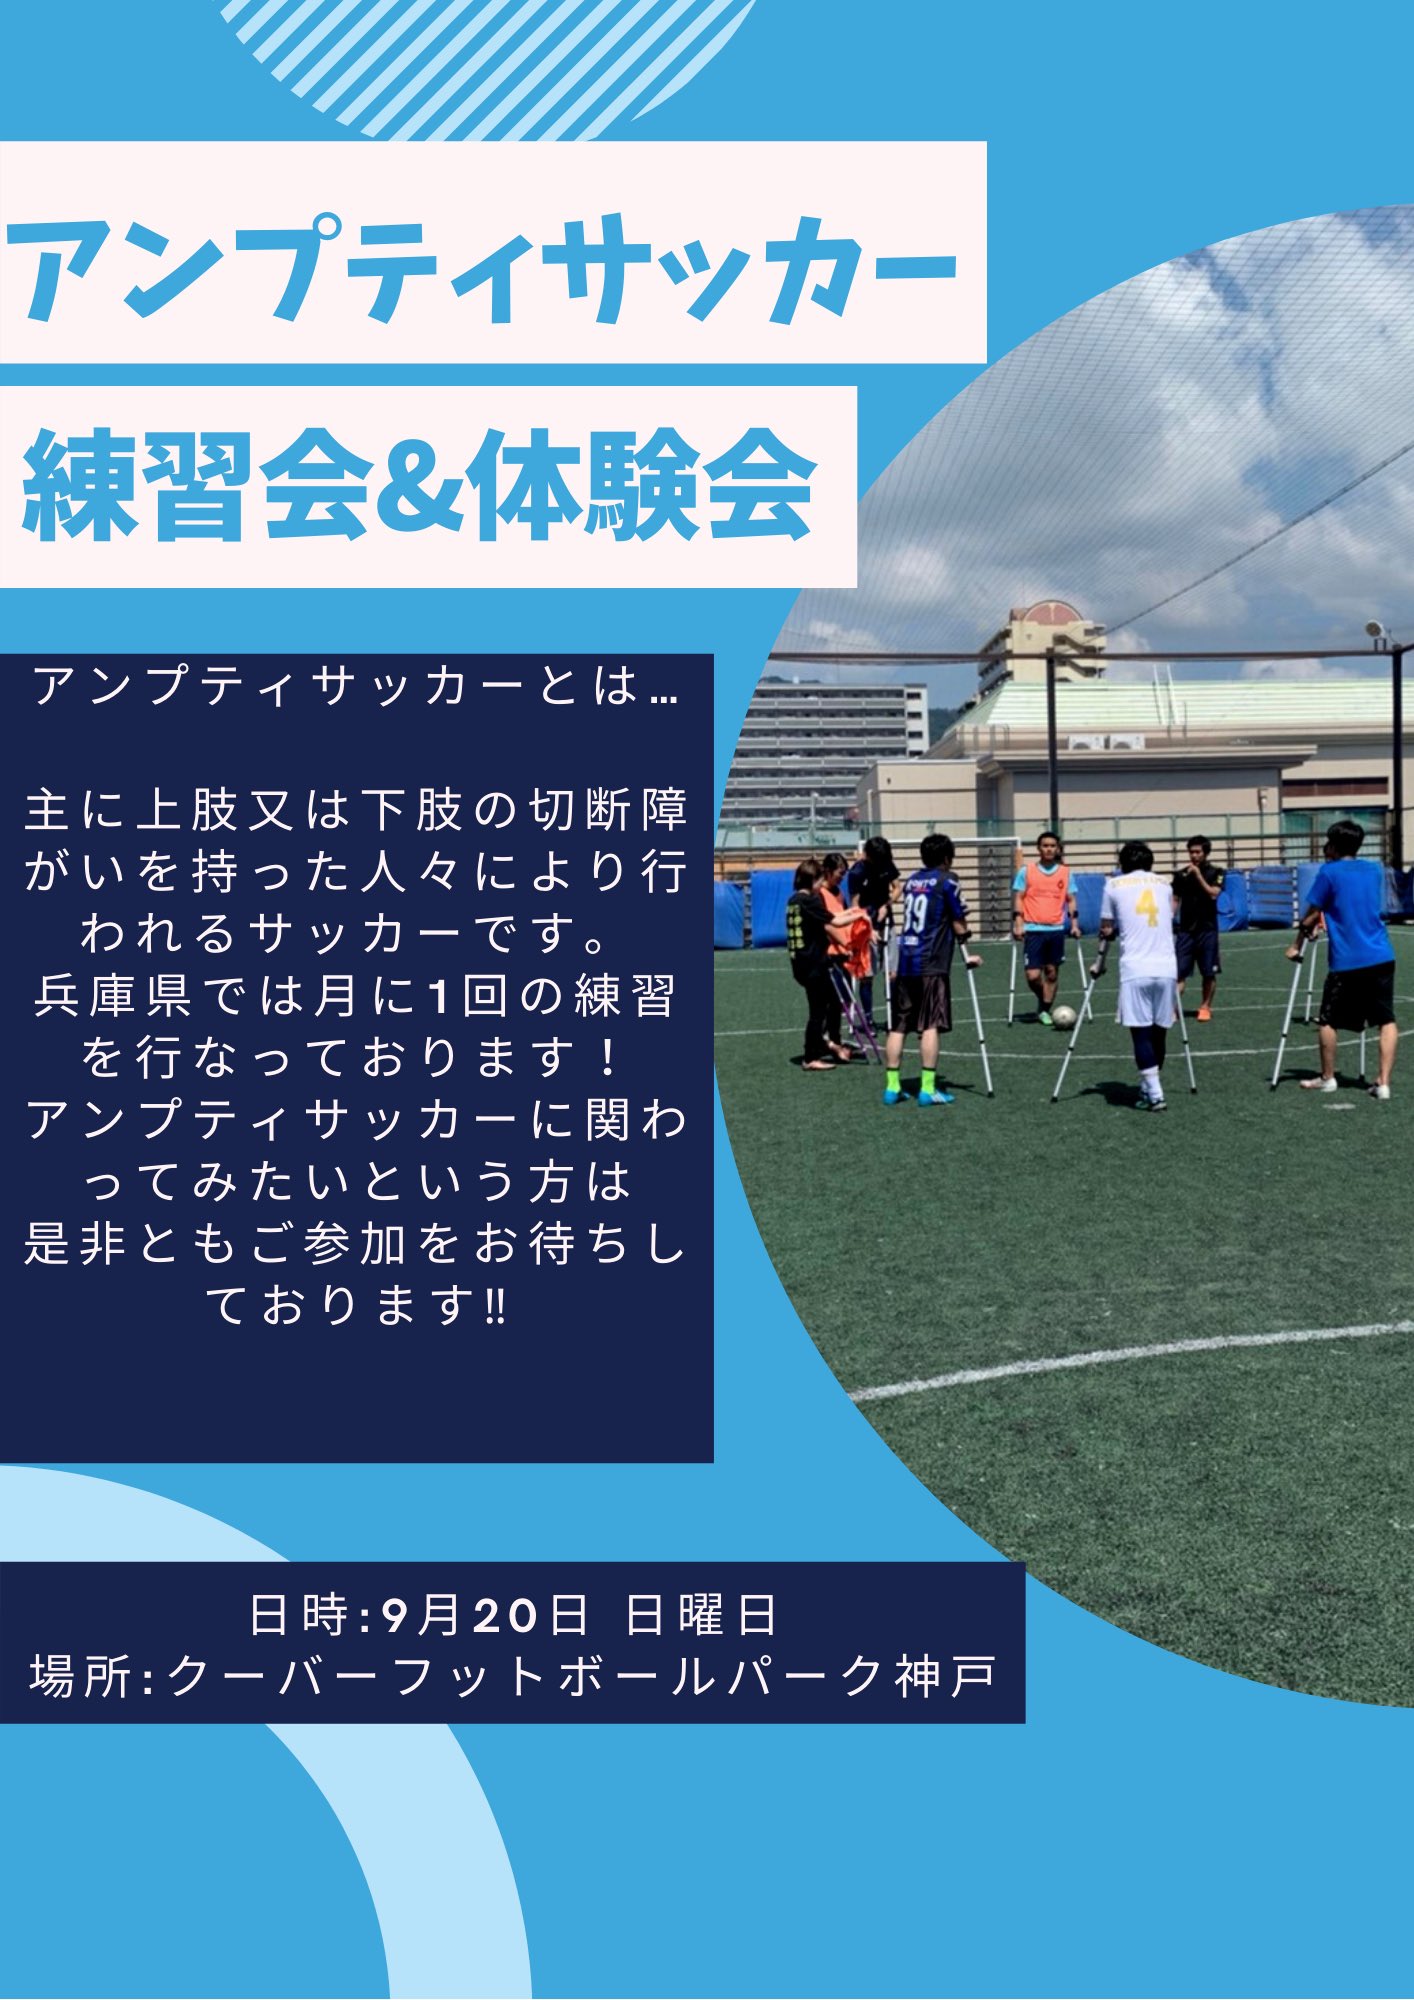 Fuga 理学療法士 トレーナー サッカー選手向けメディカル情報を発信しています Fuga Kjd5z0i Twitter